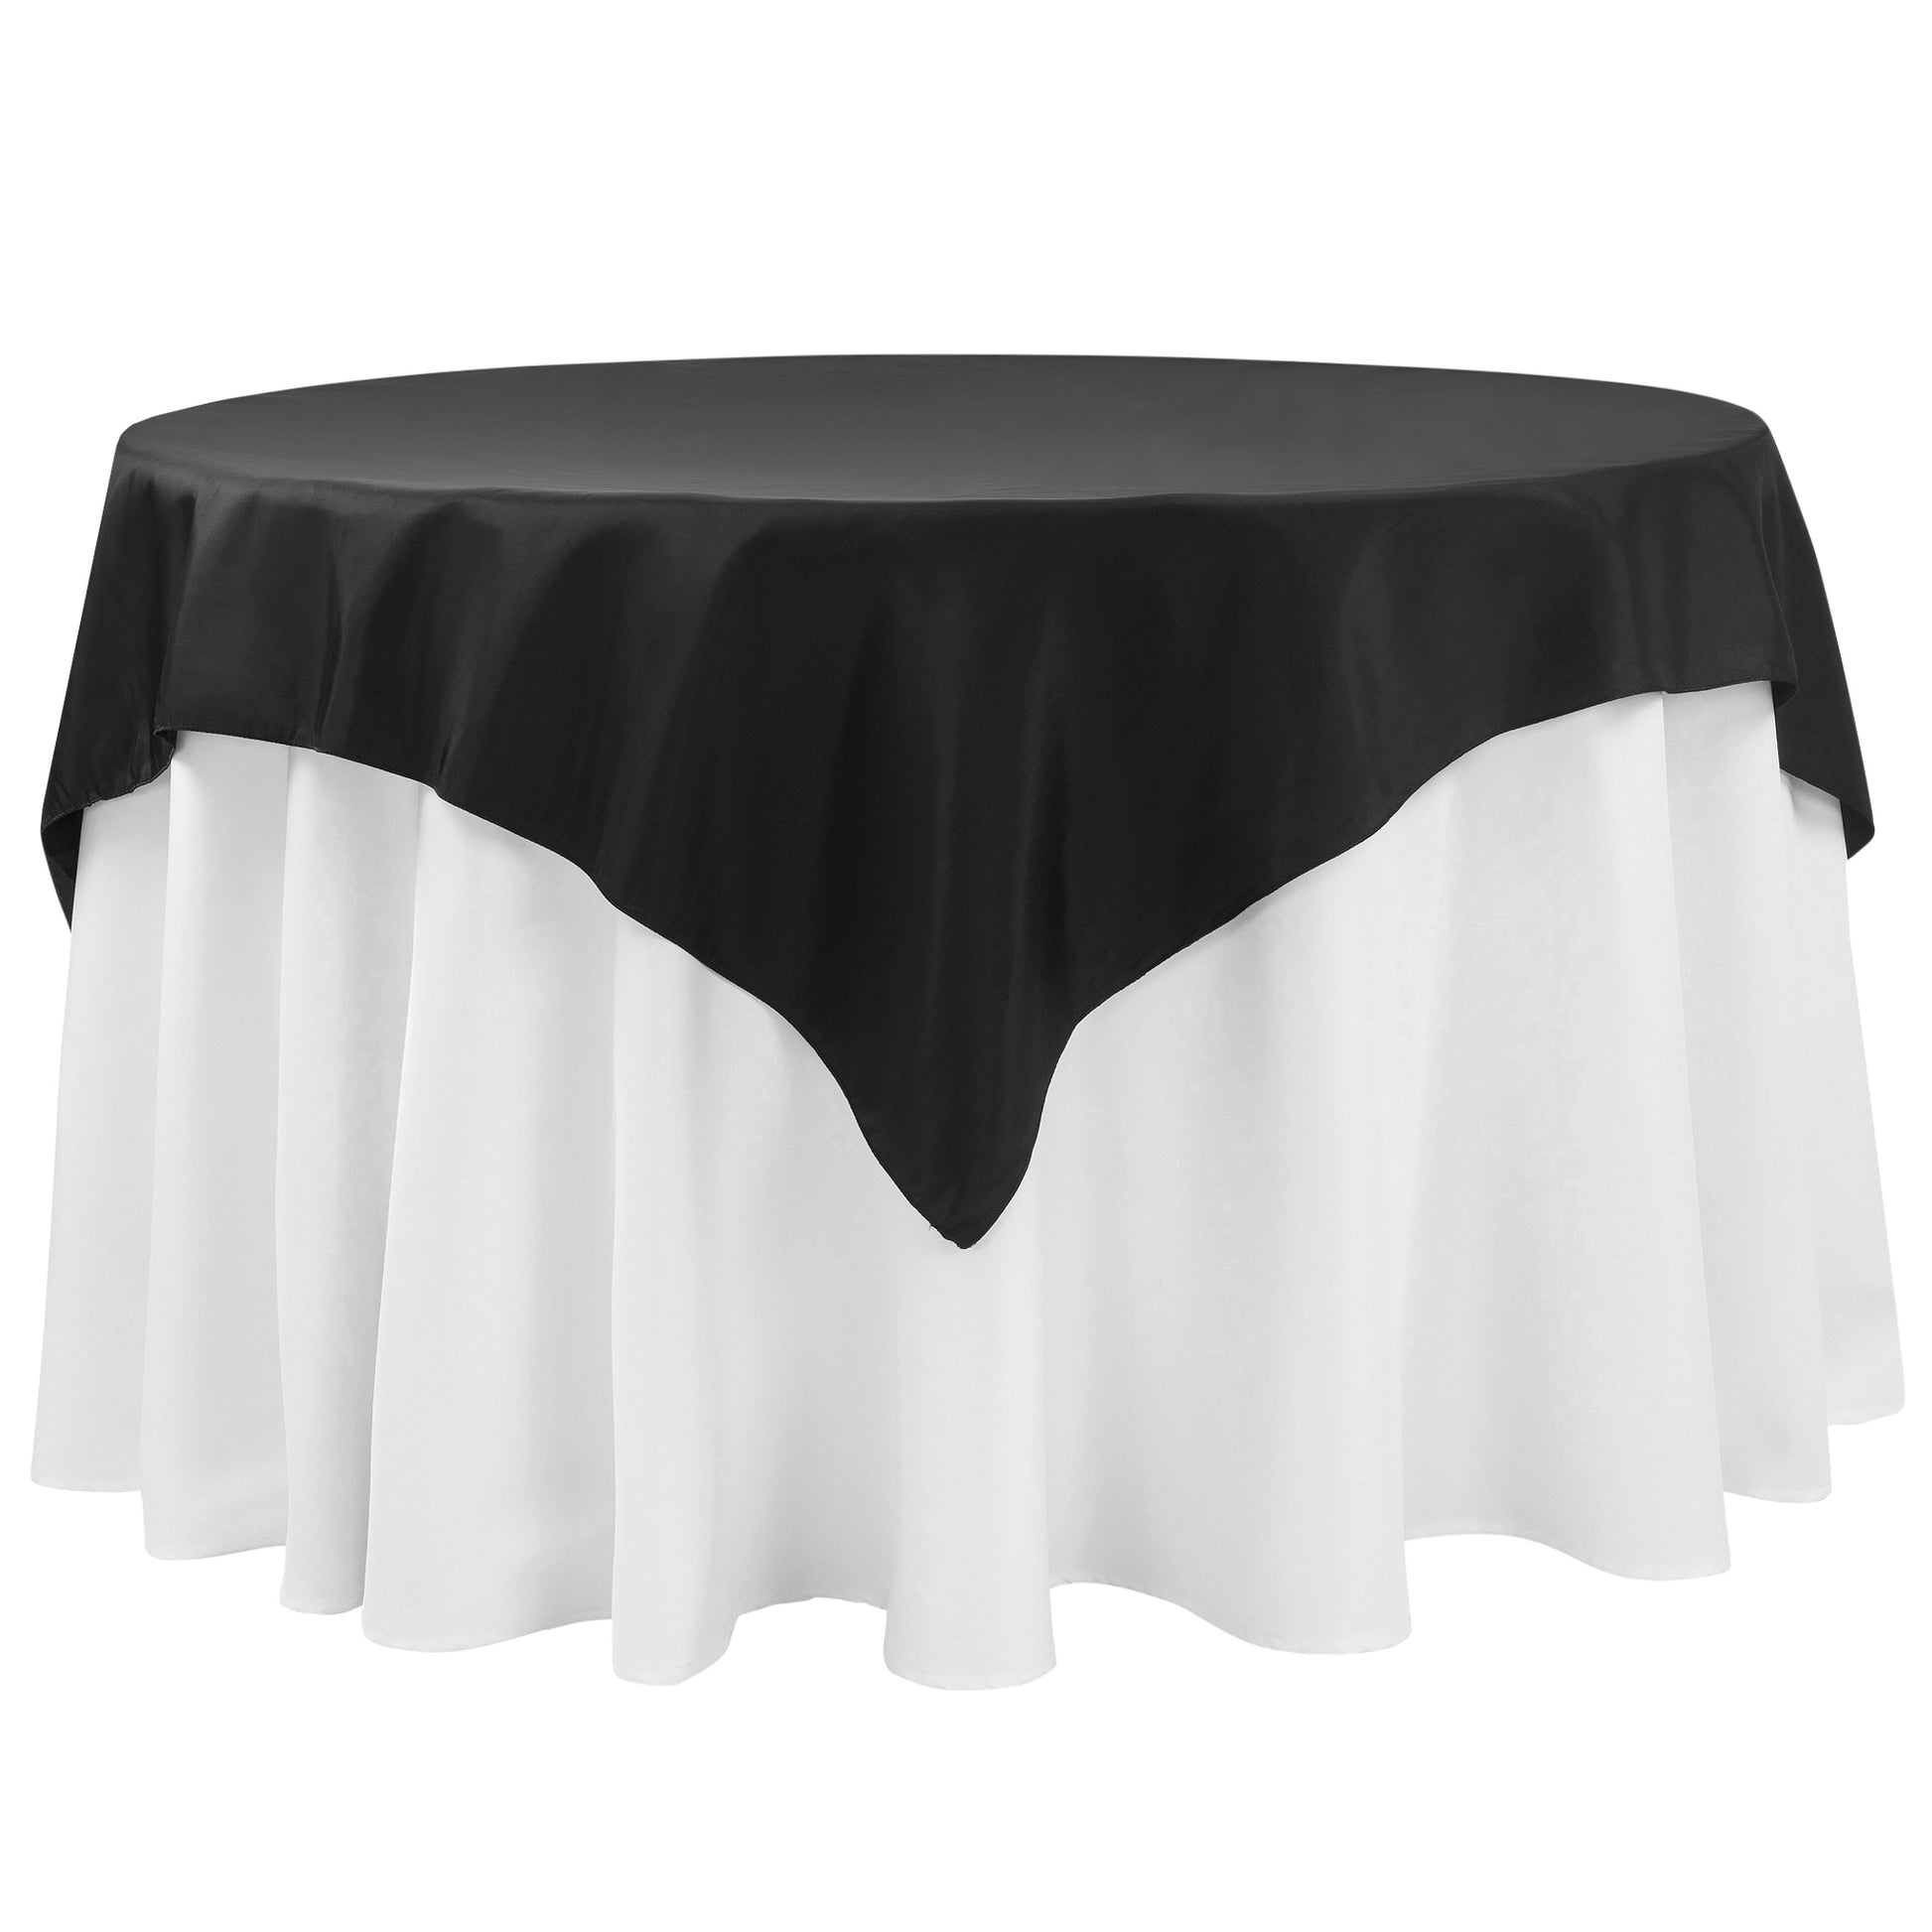 Taffeta Table Overlay Topper 54"x54" Square - Black - CV Linens